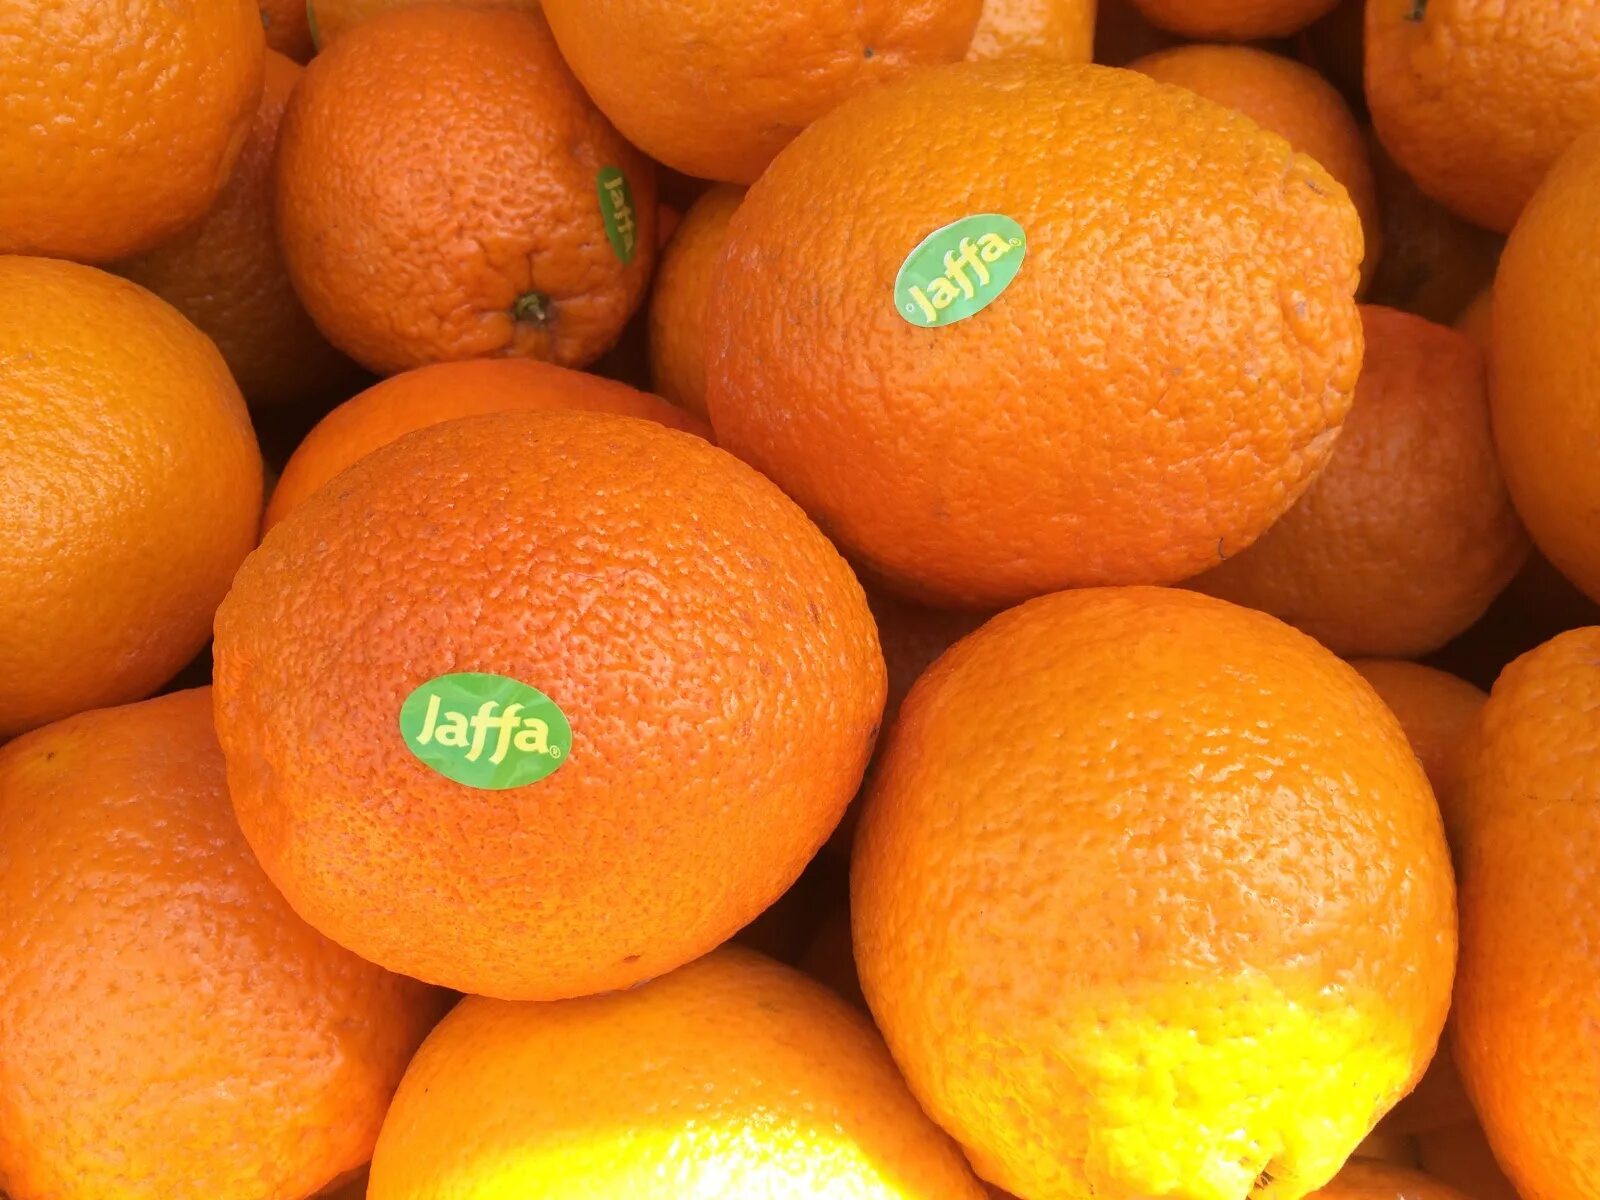 They like oranges. Апельсины сорт Яффа. Bergamot Orange. Апельсины Jaffa производитель. Аметист Ontario Jaffa Orange.